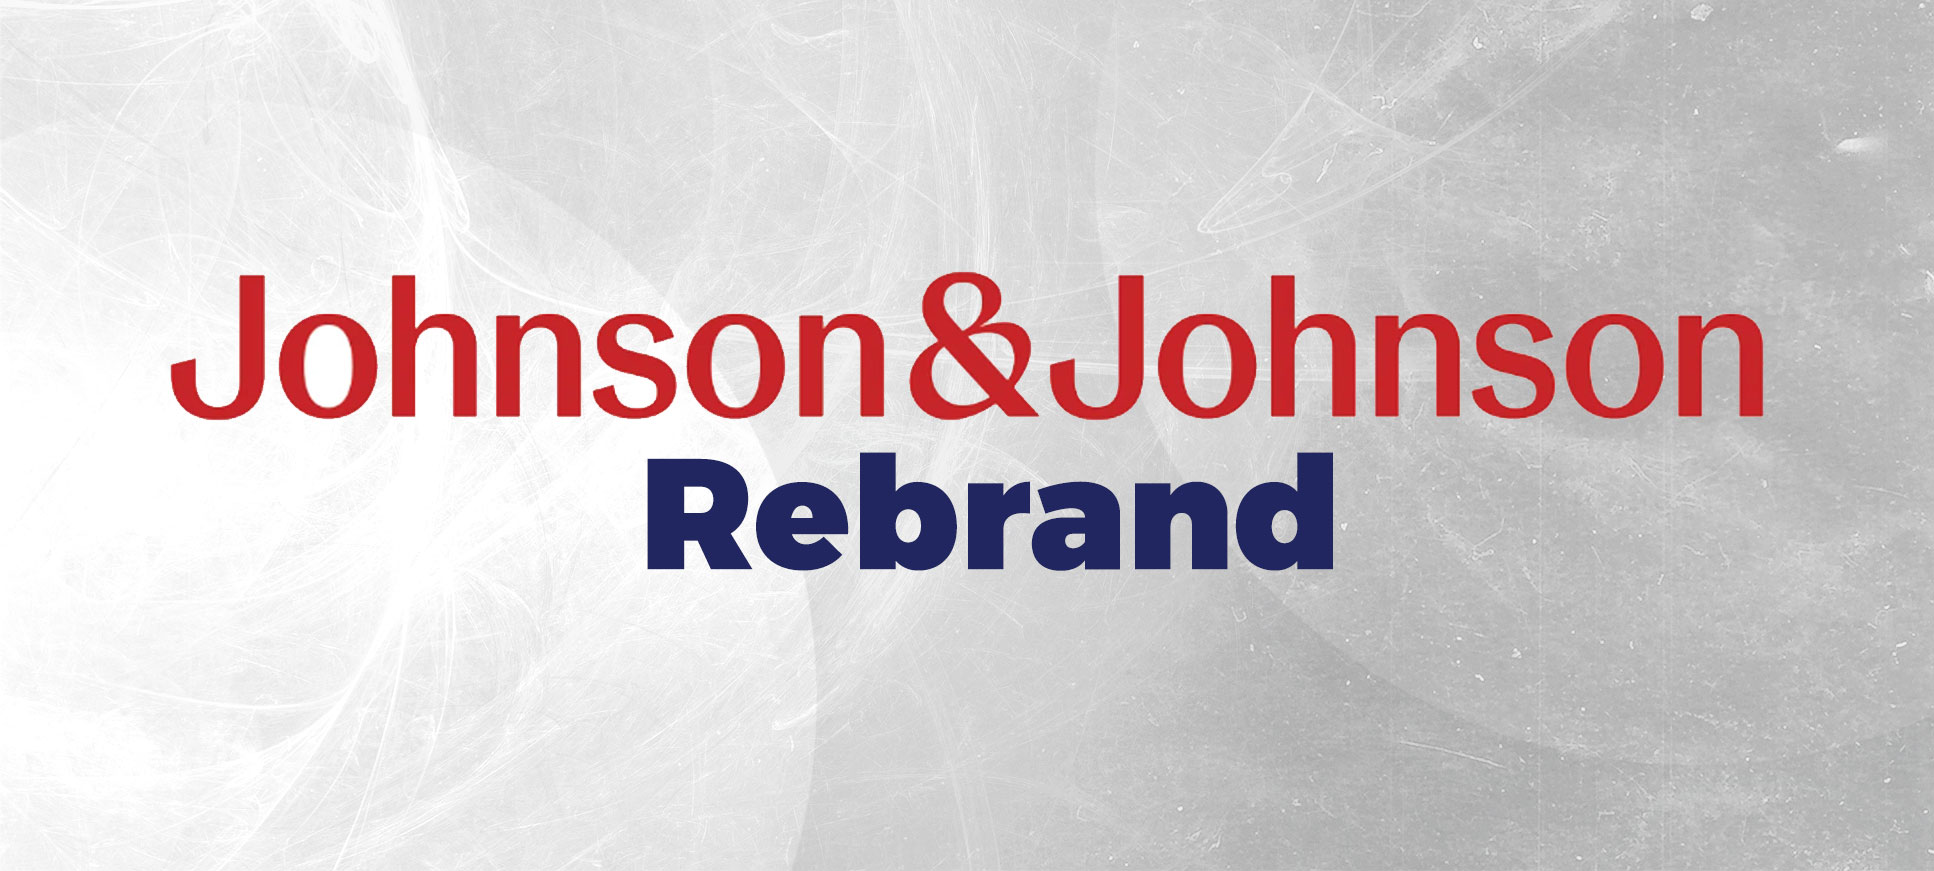 Johnson & Johnson rebrand